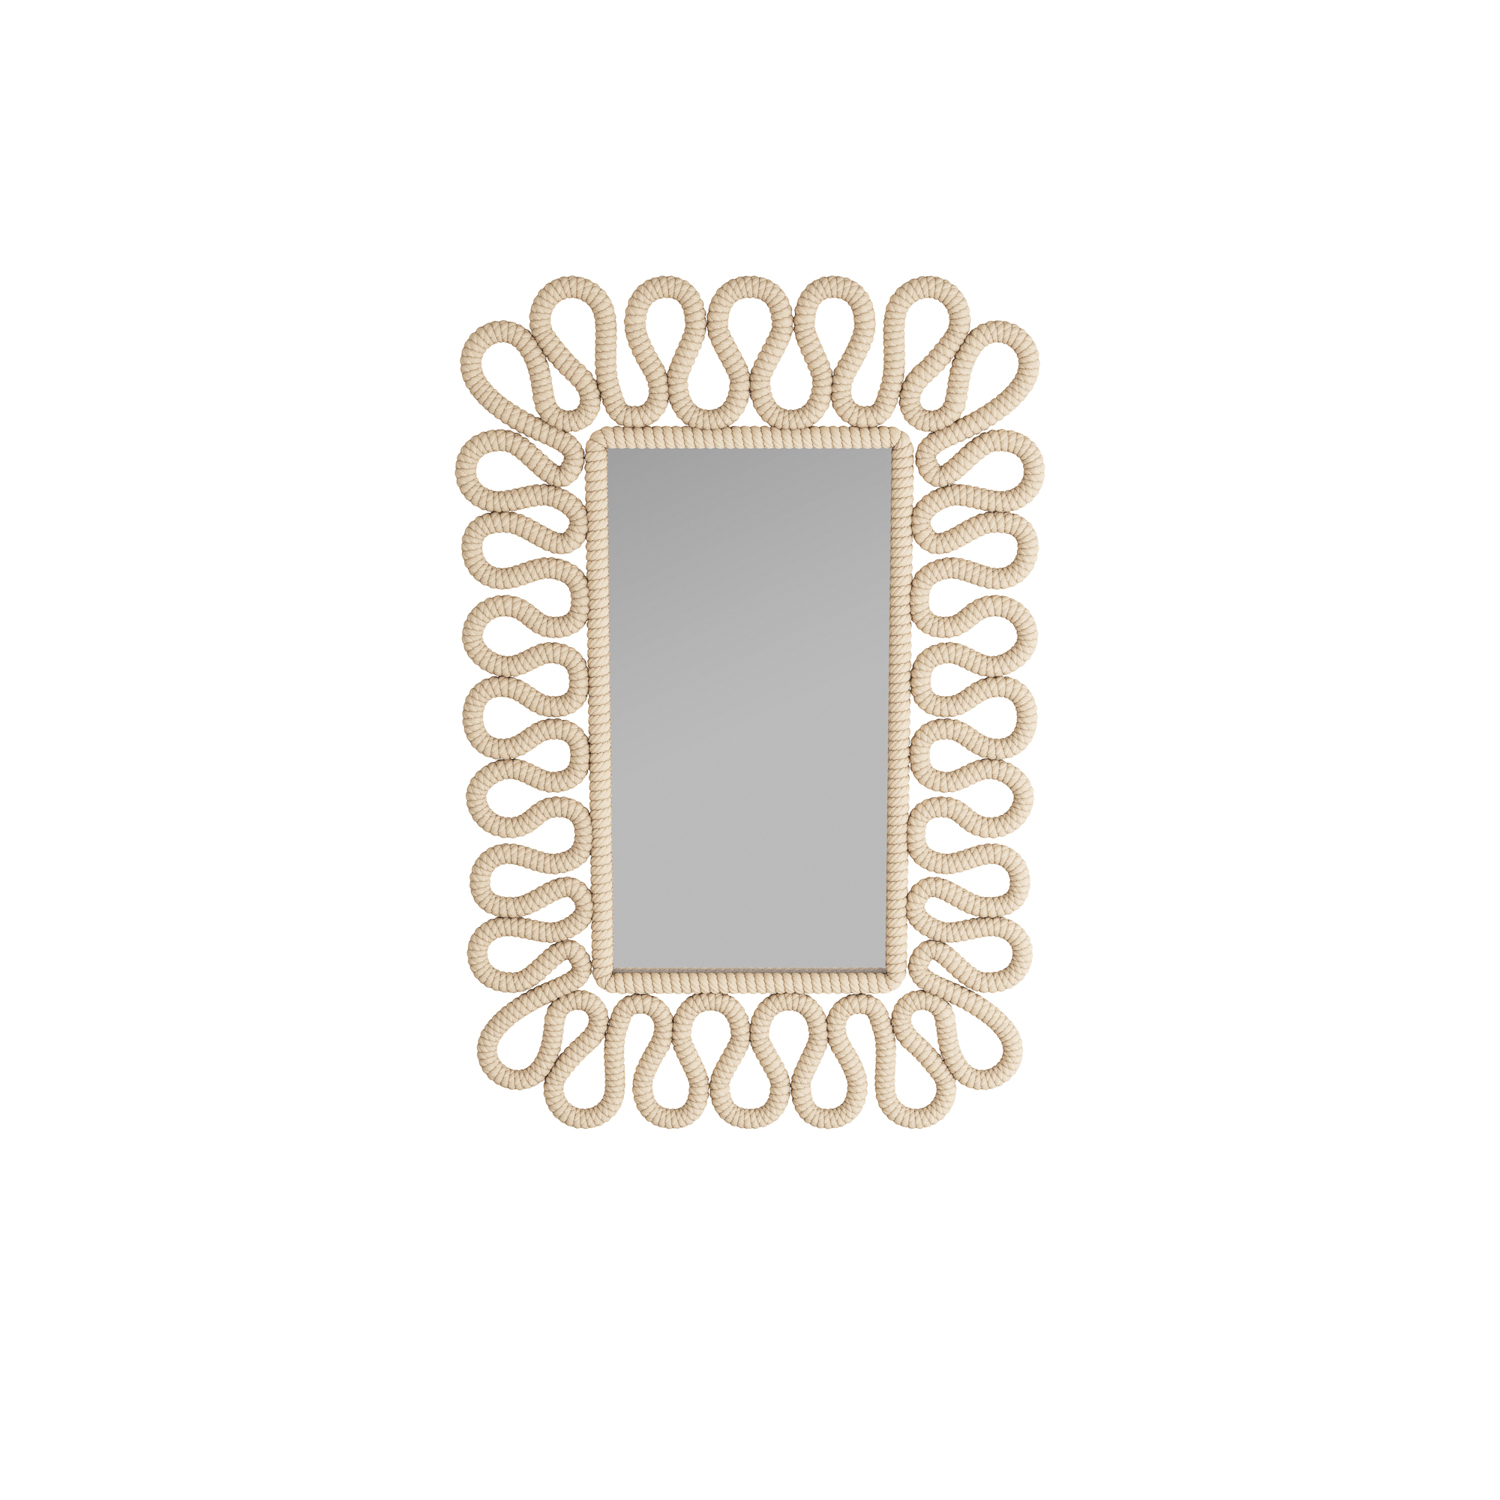 Rectangular mirror with a curvy rattan border that is part of Laura Kirar x Arteriors collab